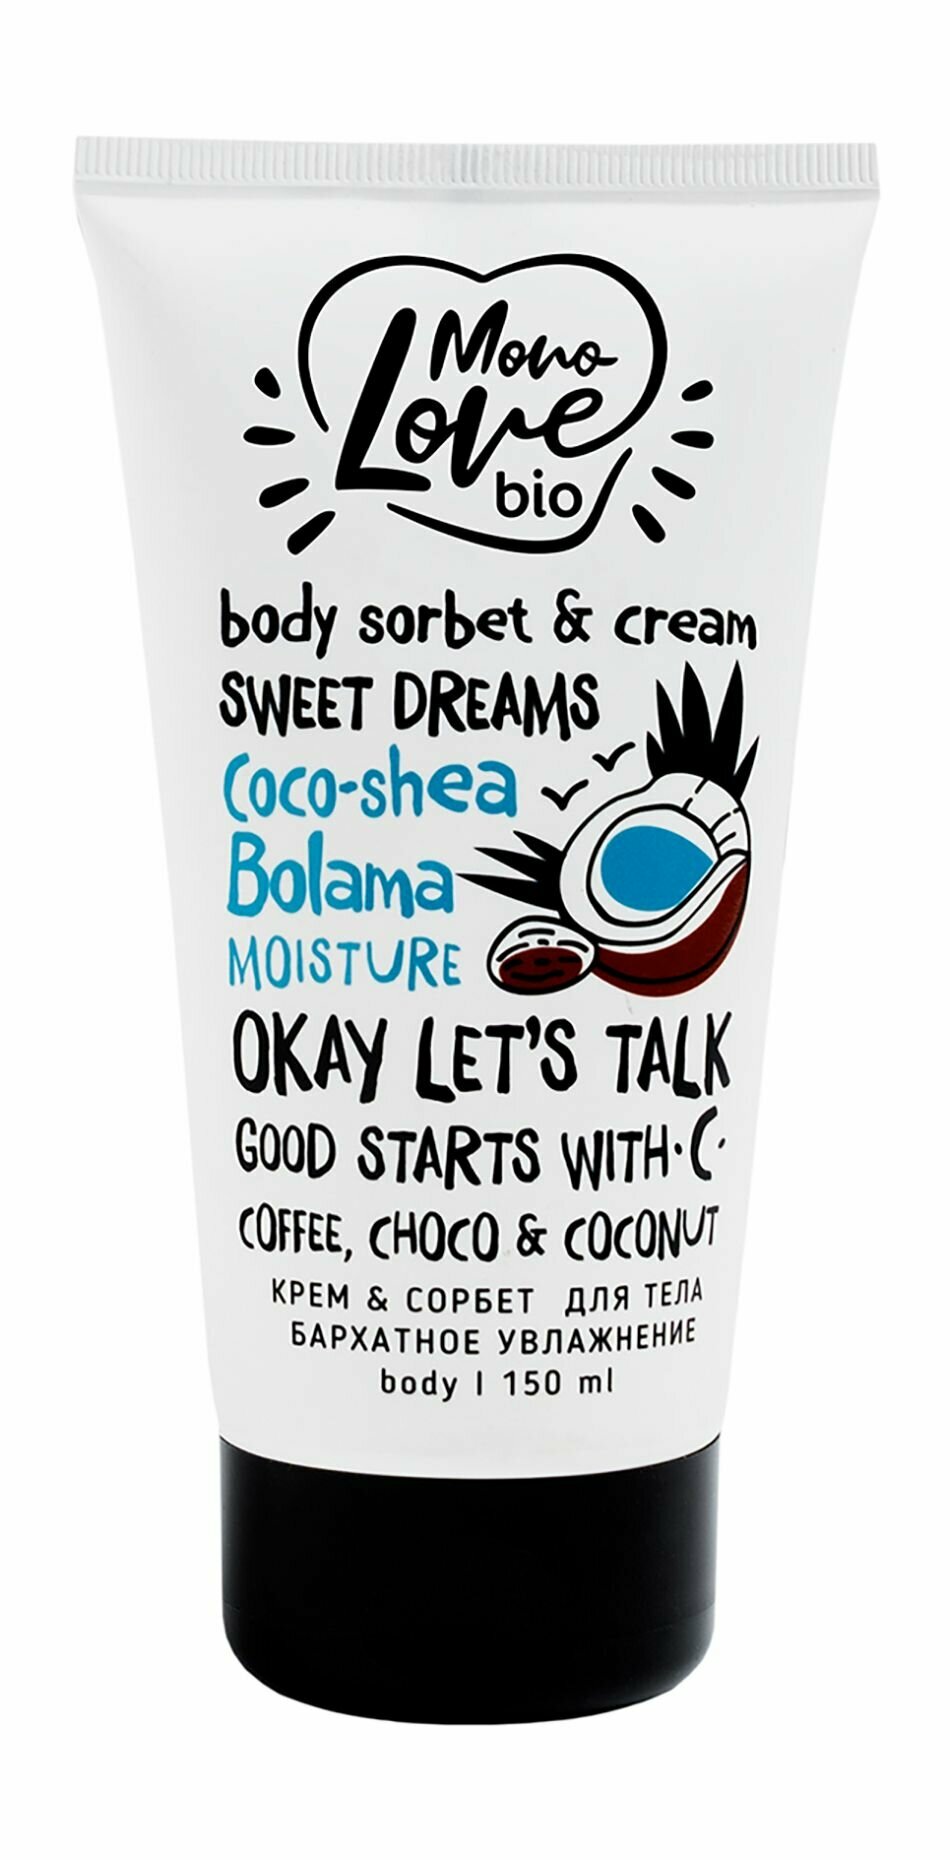 Увлажняющий крем-сорбет для тела с ароматом кокоса / MonoLove Bio Coco-Shea Bolama Moisturizing Body Sorbet & Cream